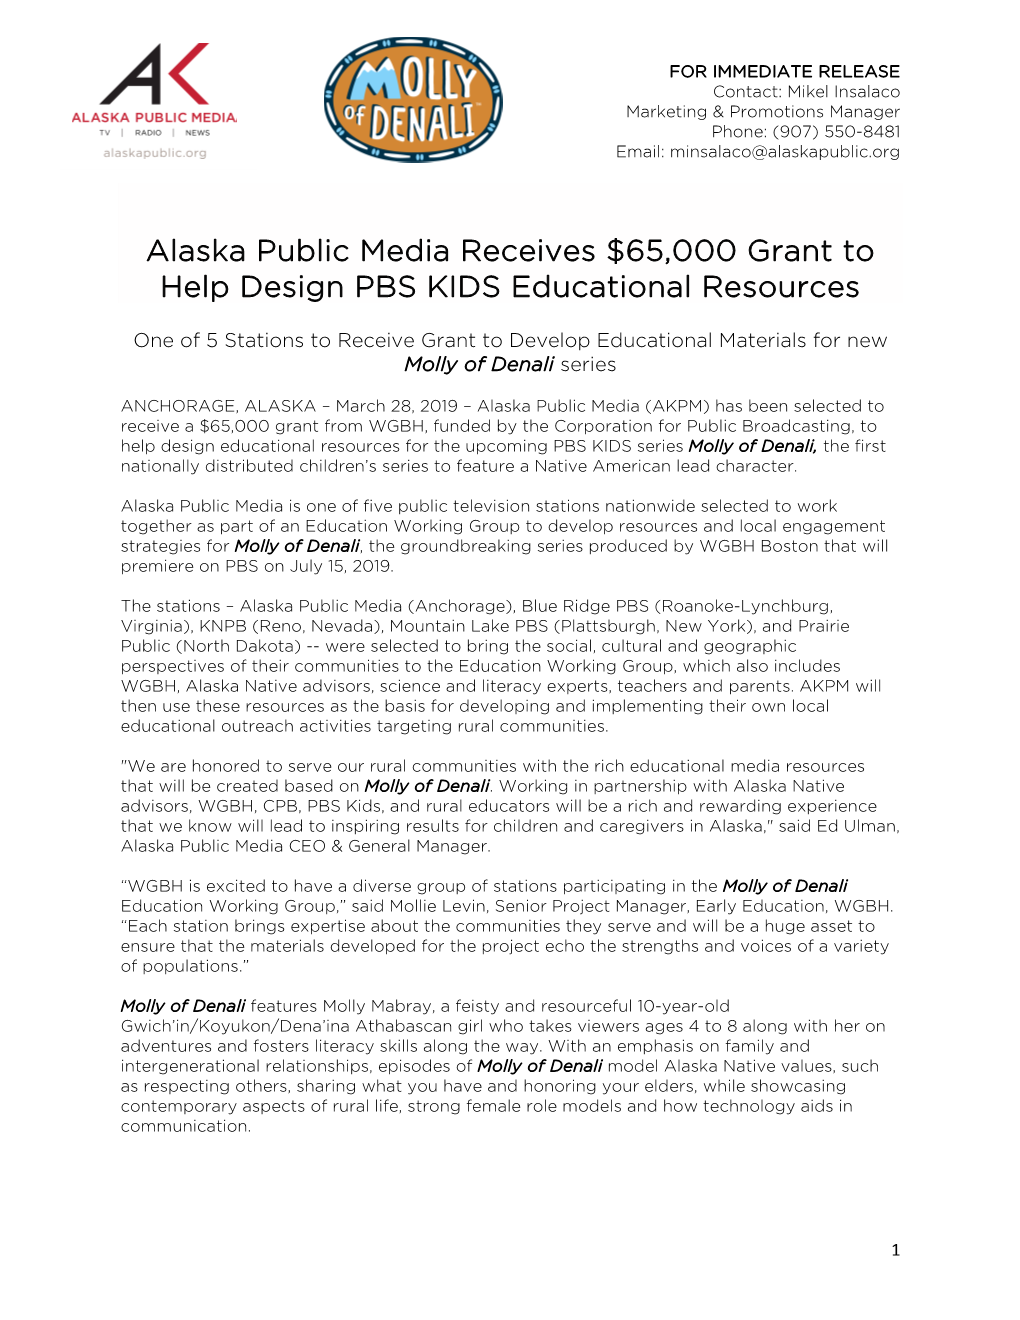 Alaska Public Media Receives $65,000 Grant to Help Design PBS KIDS Educational Resources